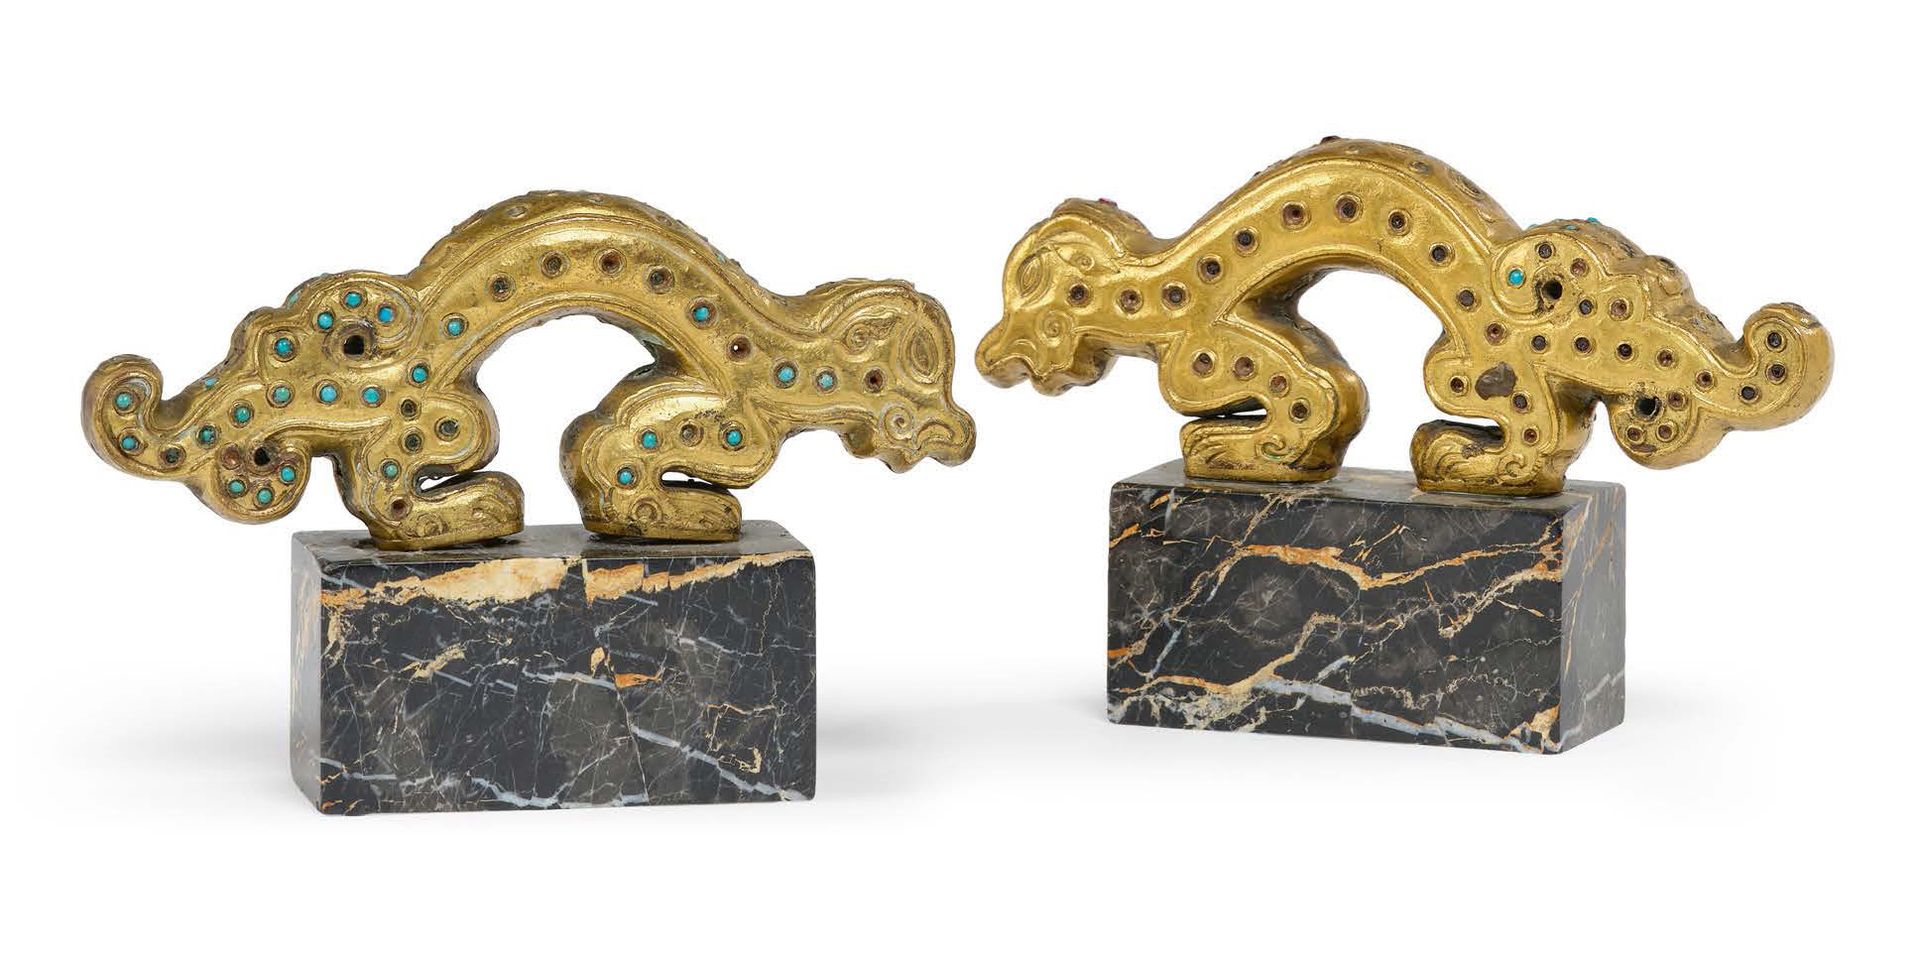 CHINE DYNASTIE QING, XVIIIe SIÈCLE 中国 清 18世纪
鎏金青铜装饰一对